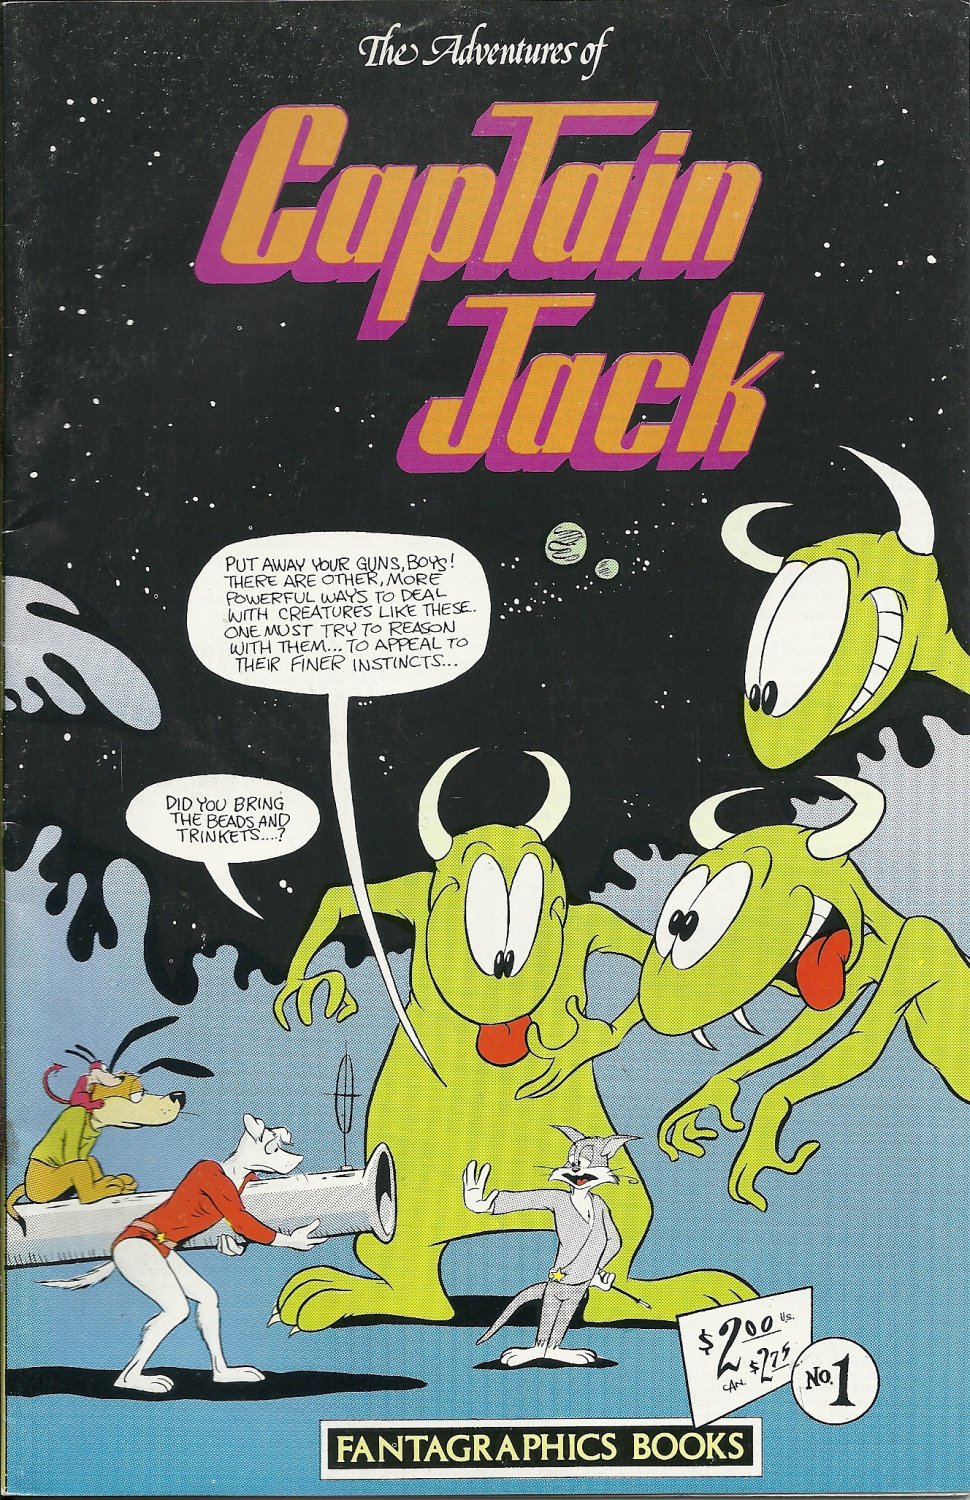 Adventures of Captain Jack Lot #1 - Very Fine - Fantagraphics - 1986-1988